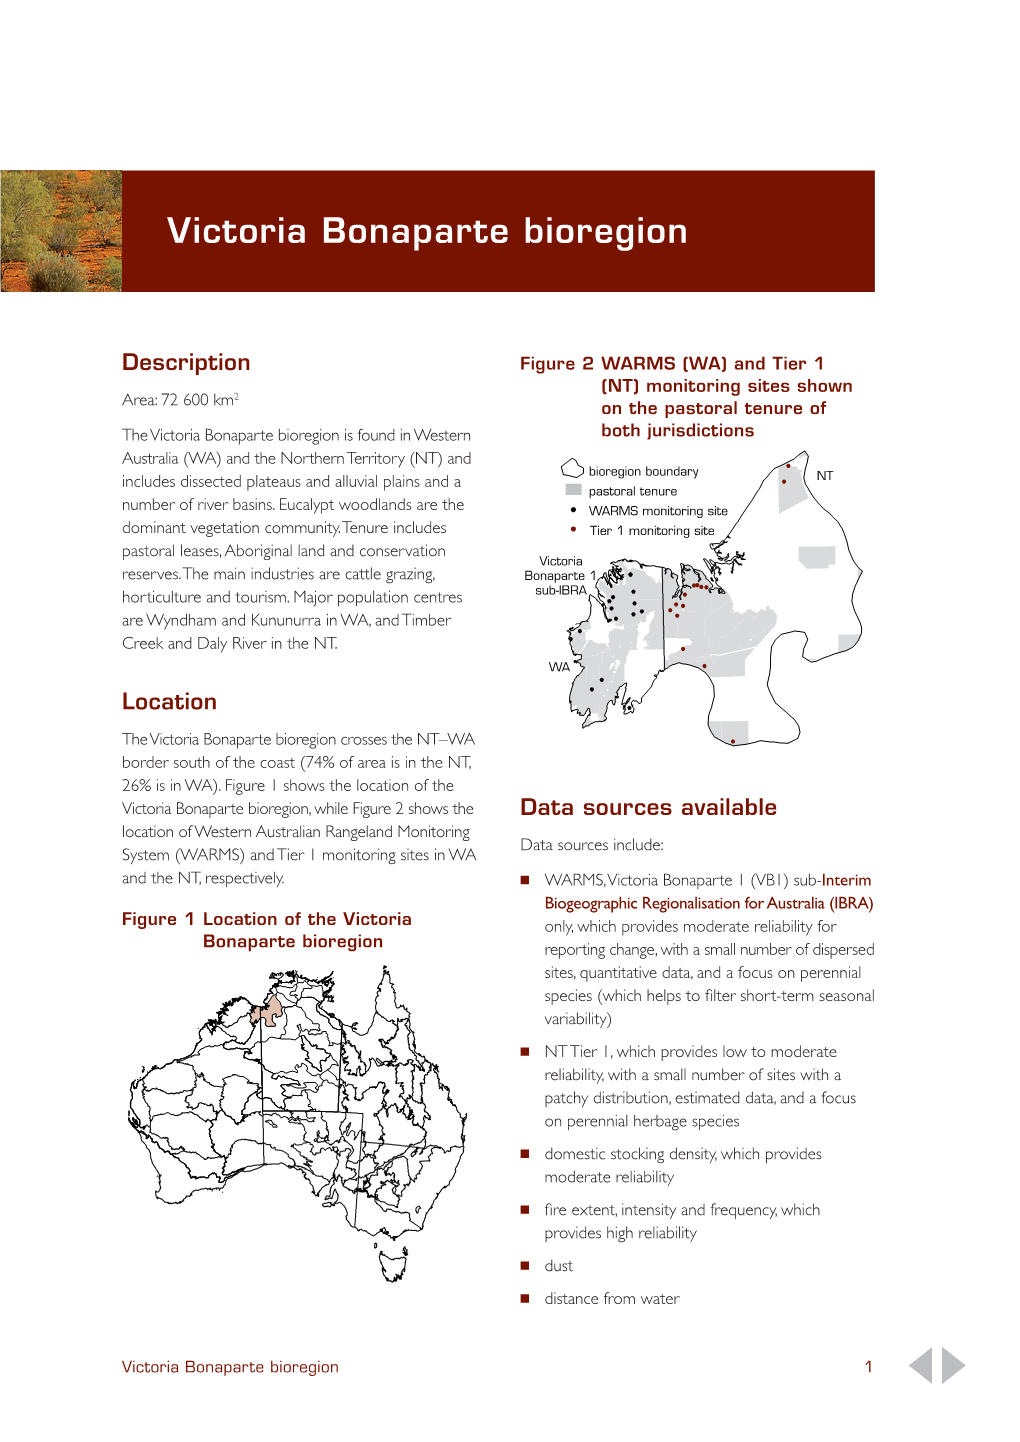 Victoria Bonaparte Bioregion